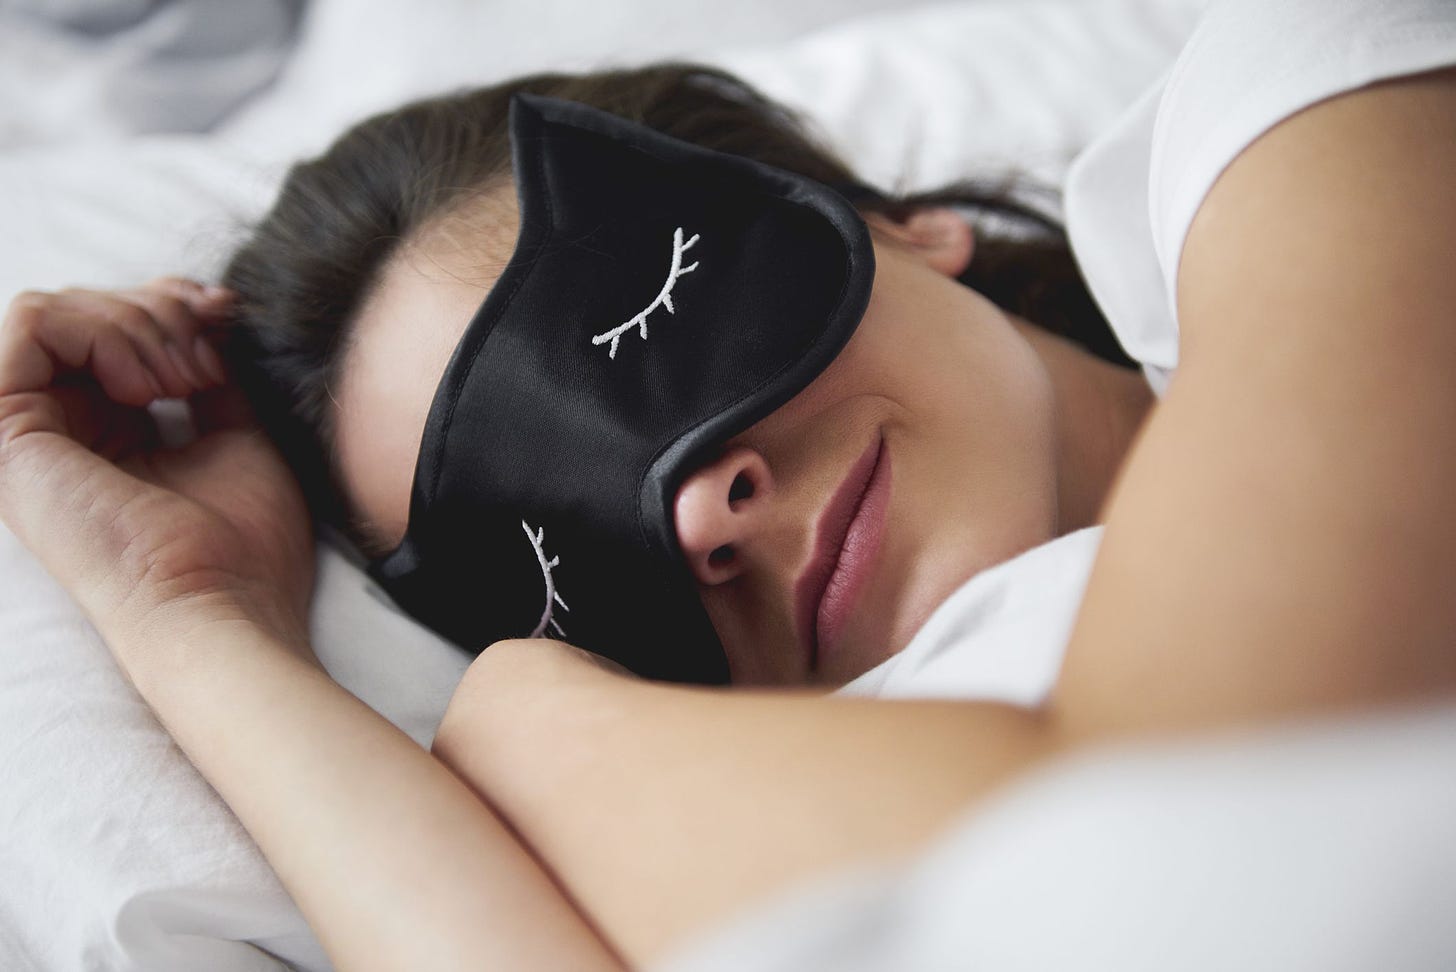 What Is Beauty Sleep? Health and Skin Care Benefits of Beauty Sleep